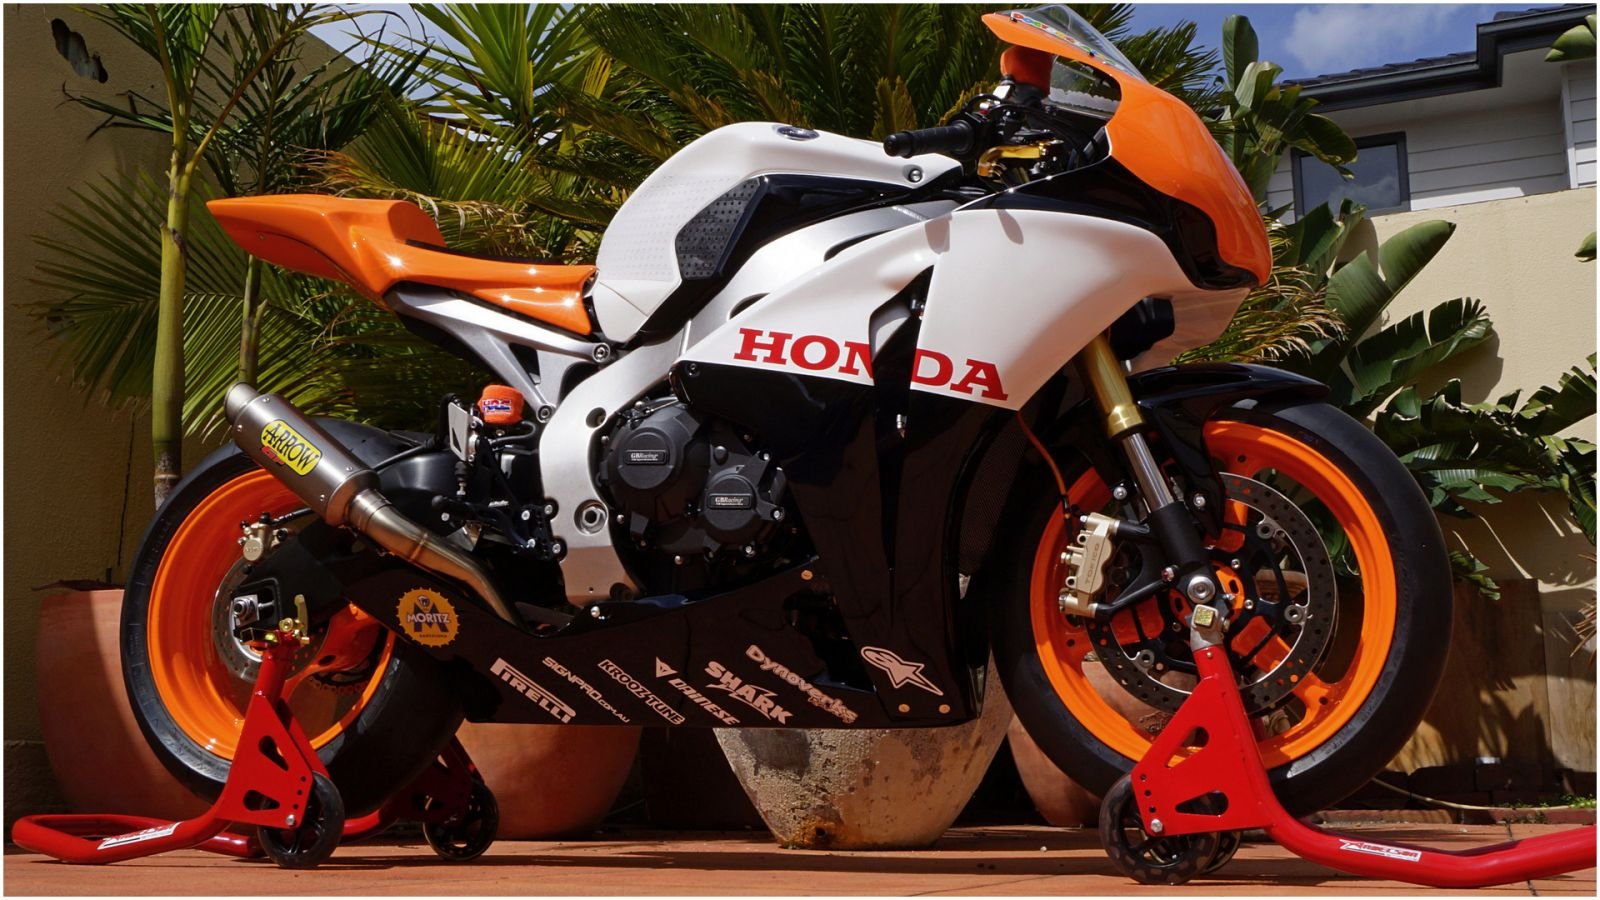 Красно белый мотоцикл. Honda cbr1000rr оранжевый. Honda cbr1000rr 2009. Honda cbr600rr оранжевый. Honda 1000rr оранжевый мотюл.